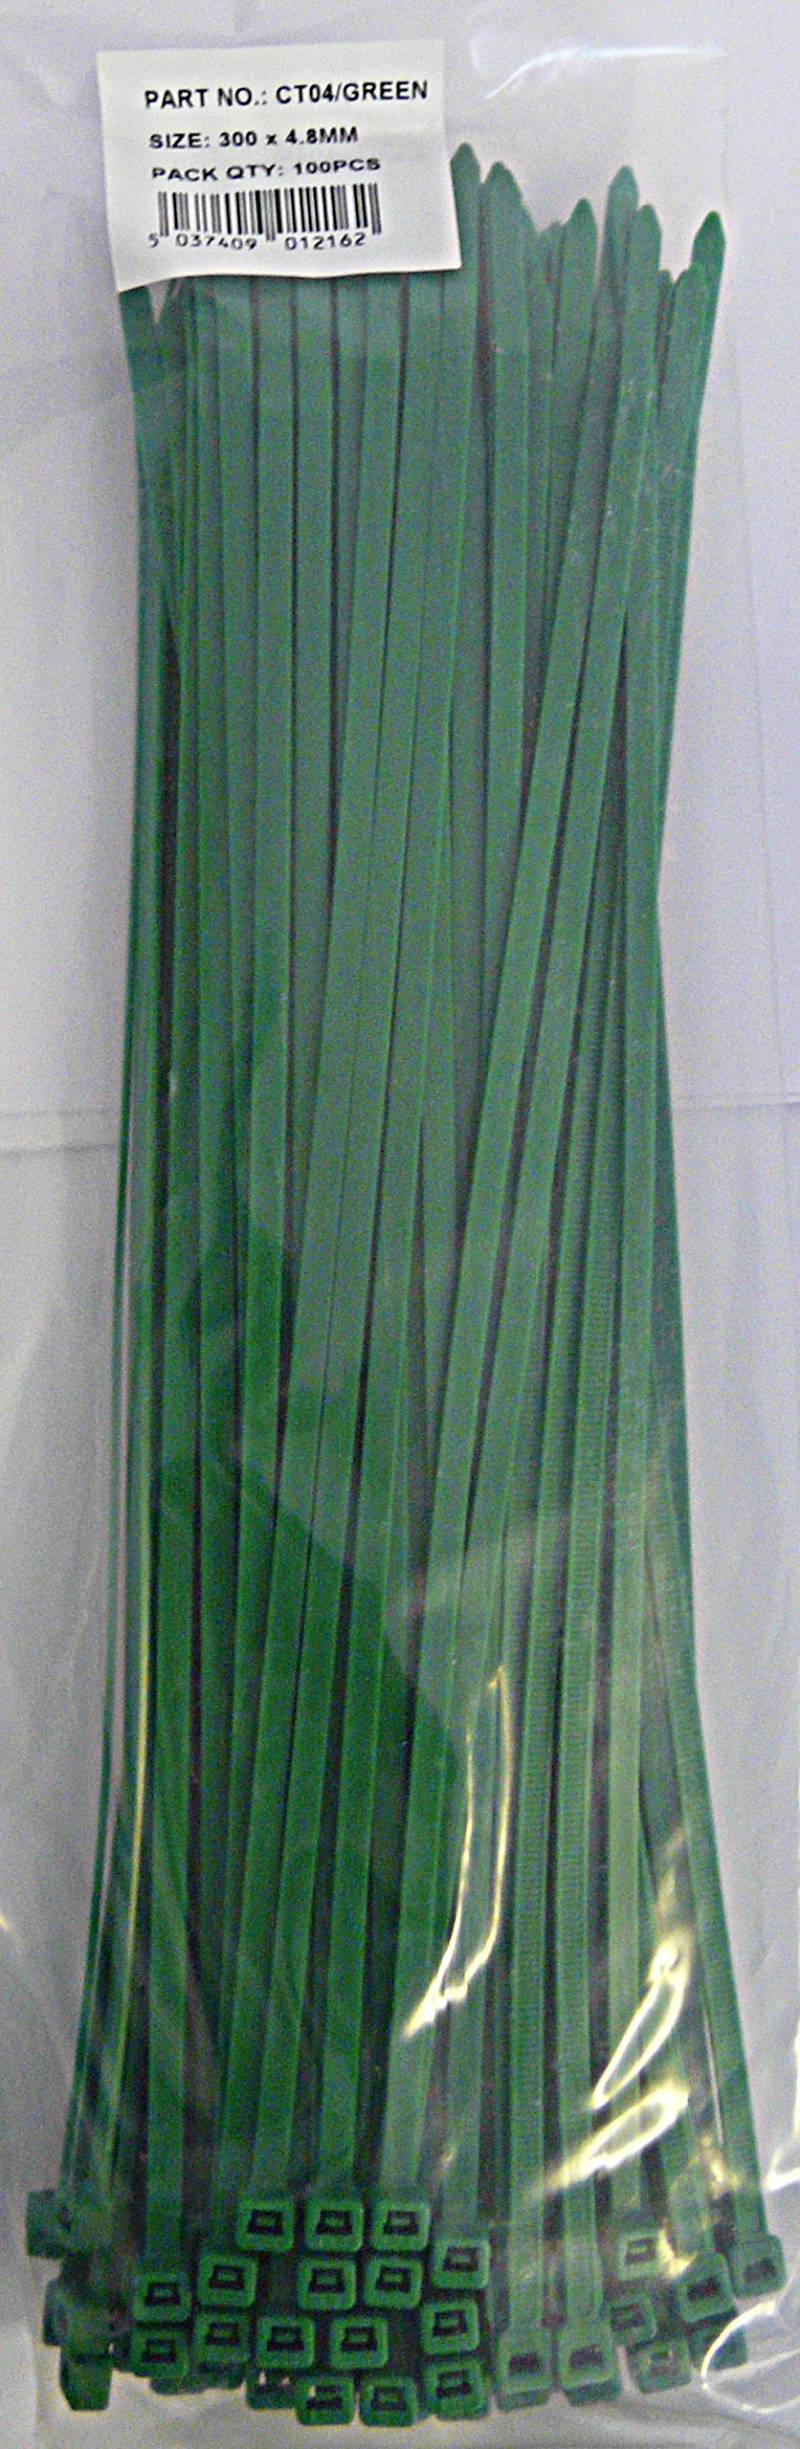 Simply Kabelbinder CT04/grün, grün von Simply